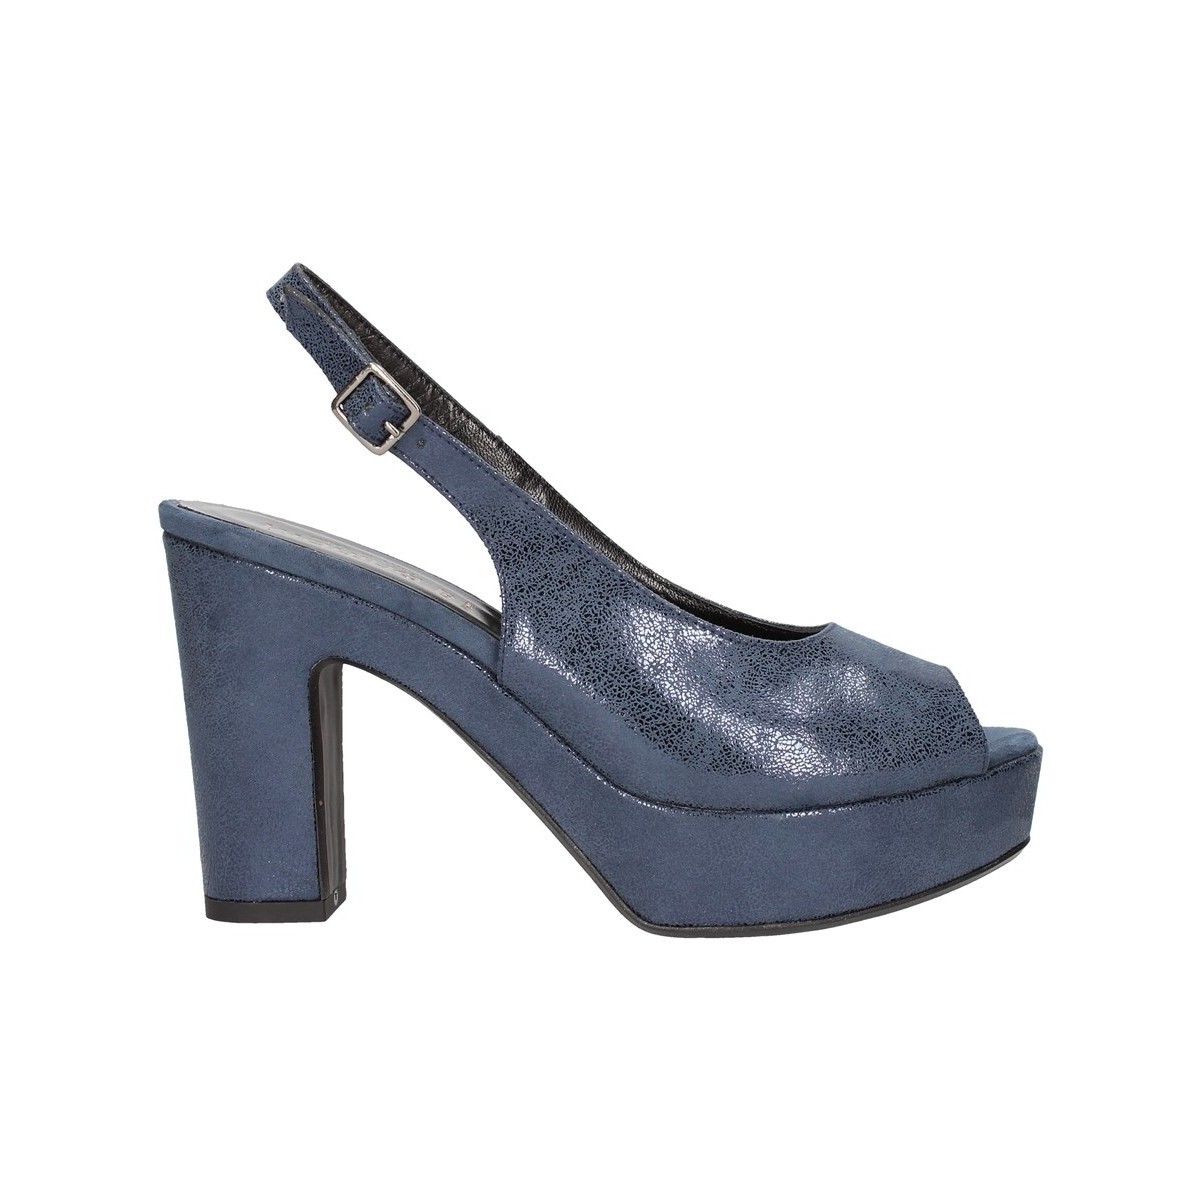 Chaussures Femme Sandales et Nu-pieds Martina B 19-159-nv santal Femme Bleu Bleu